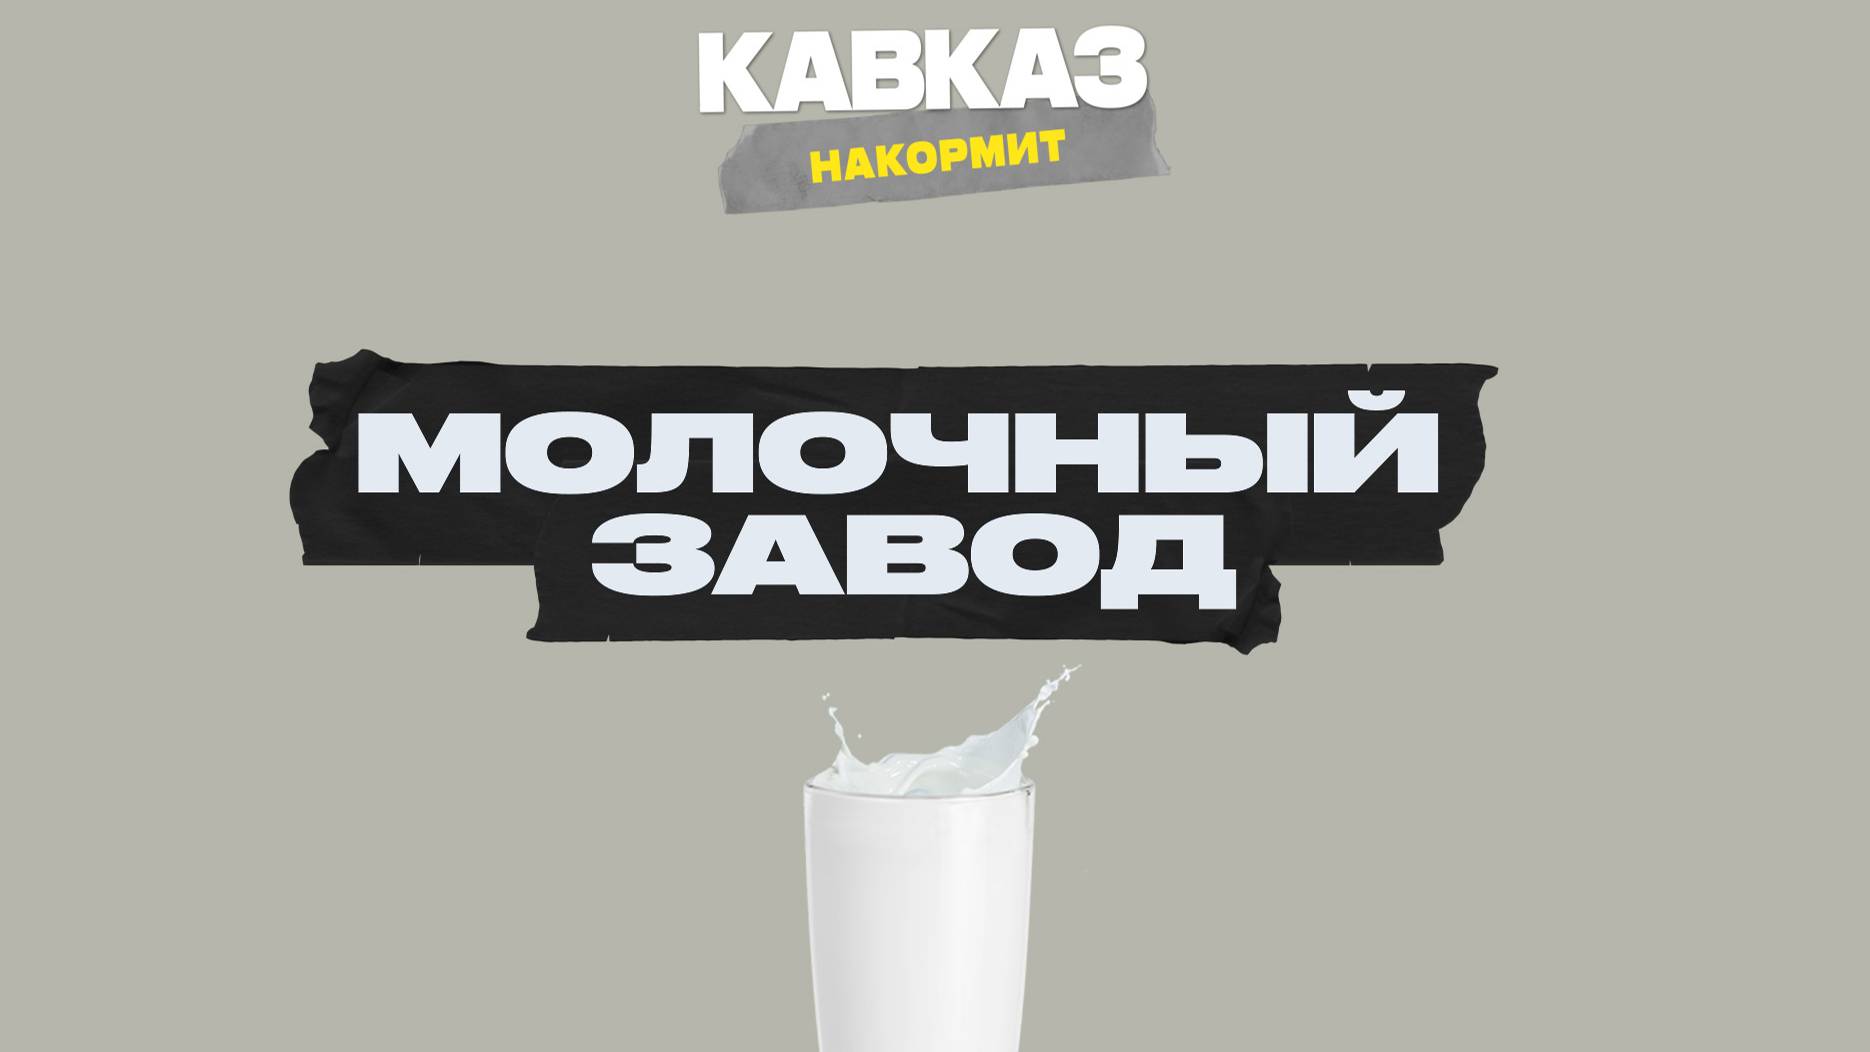 Кавказ накормит: Молочный завод